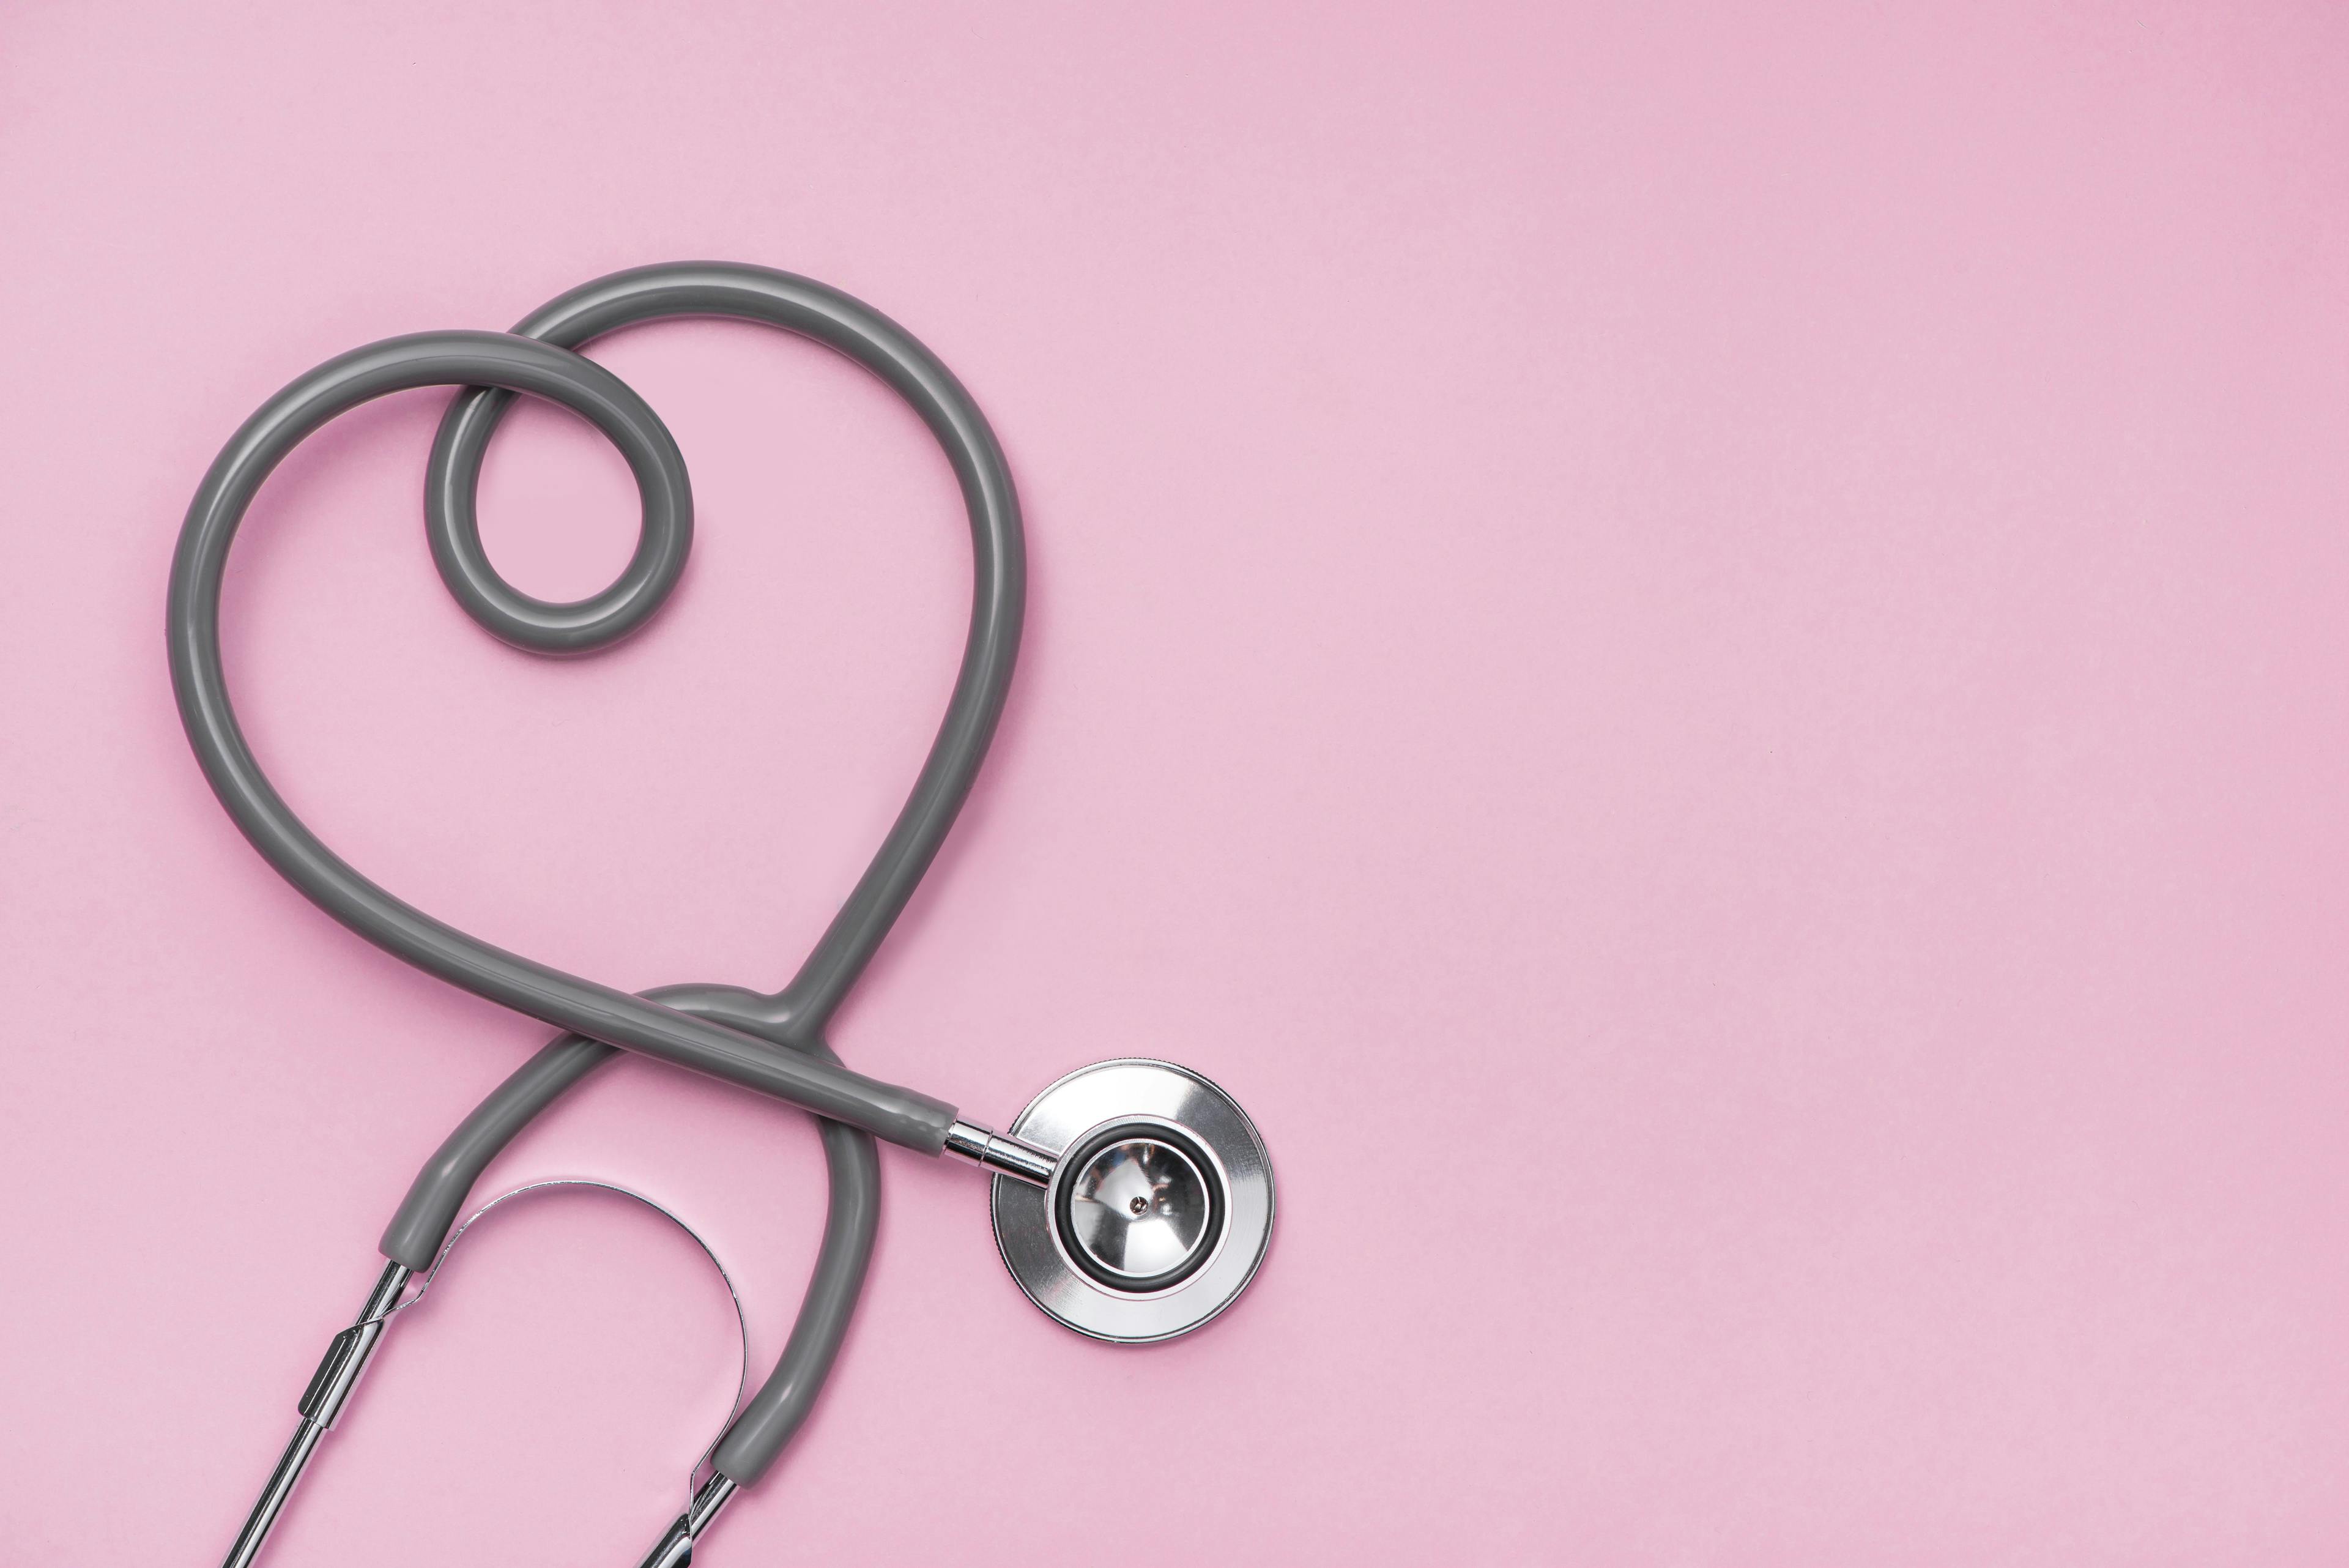 Stethoscope with heart shape on pink background | makistock - stock.adobe.com